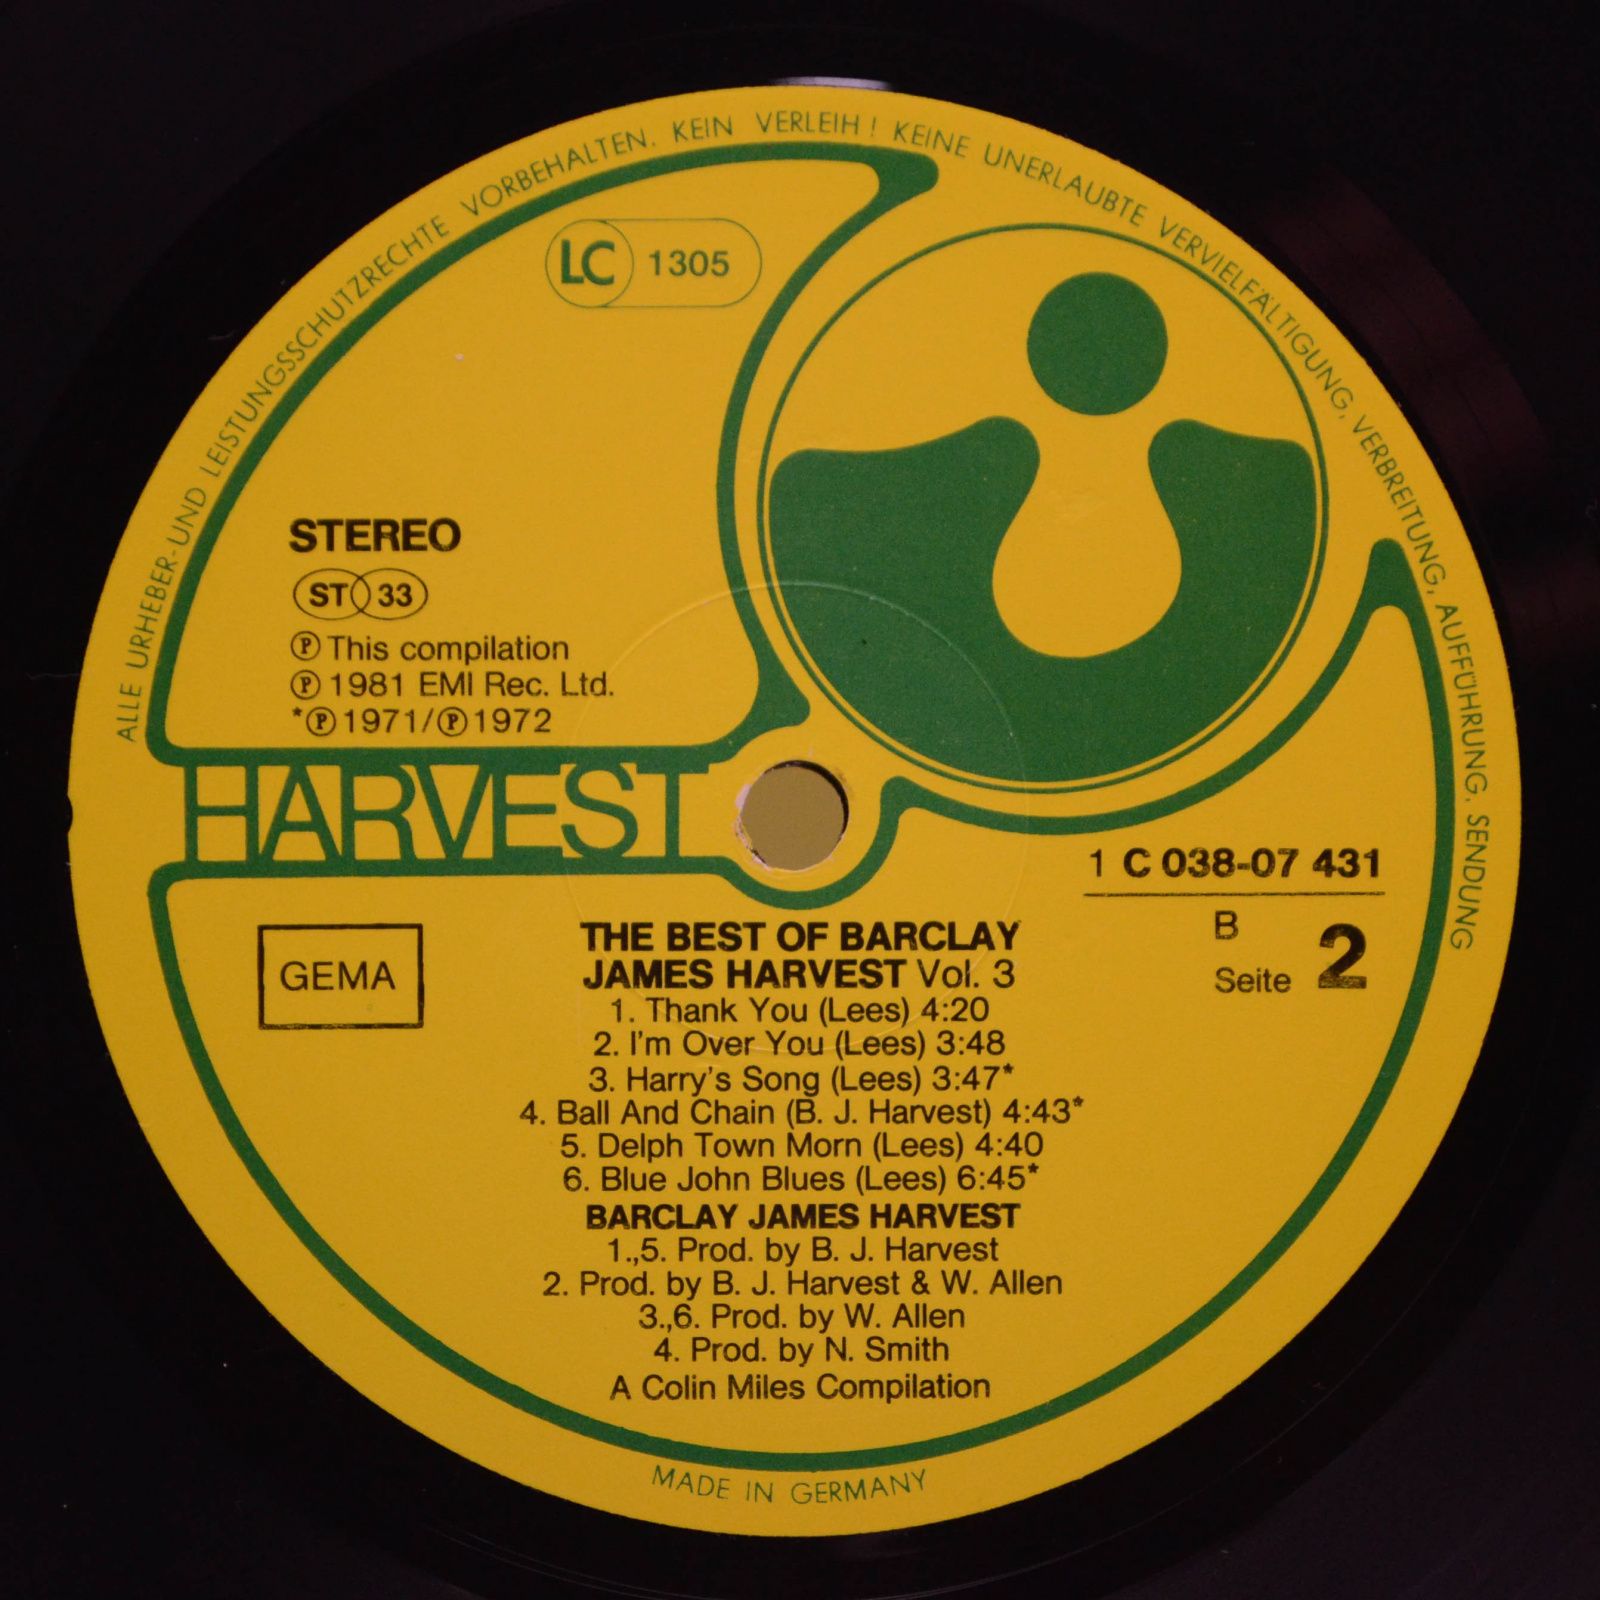 Barclay James Harvest — The Best Of Barclay James Harvest Volume 3, 1981